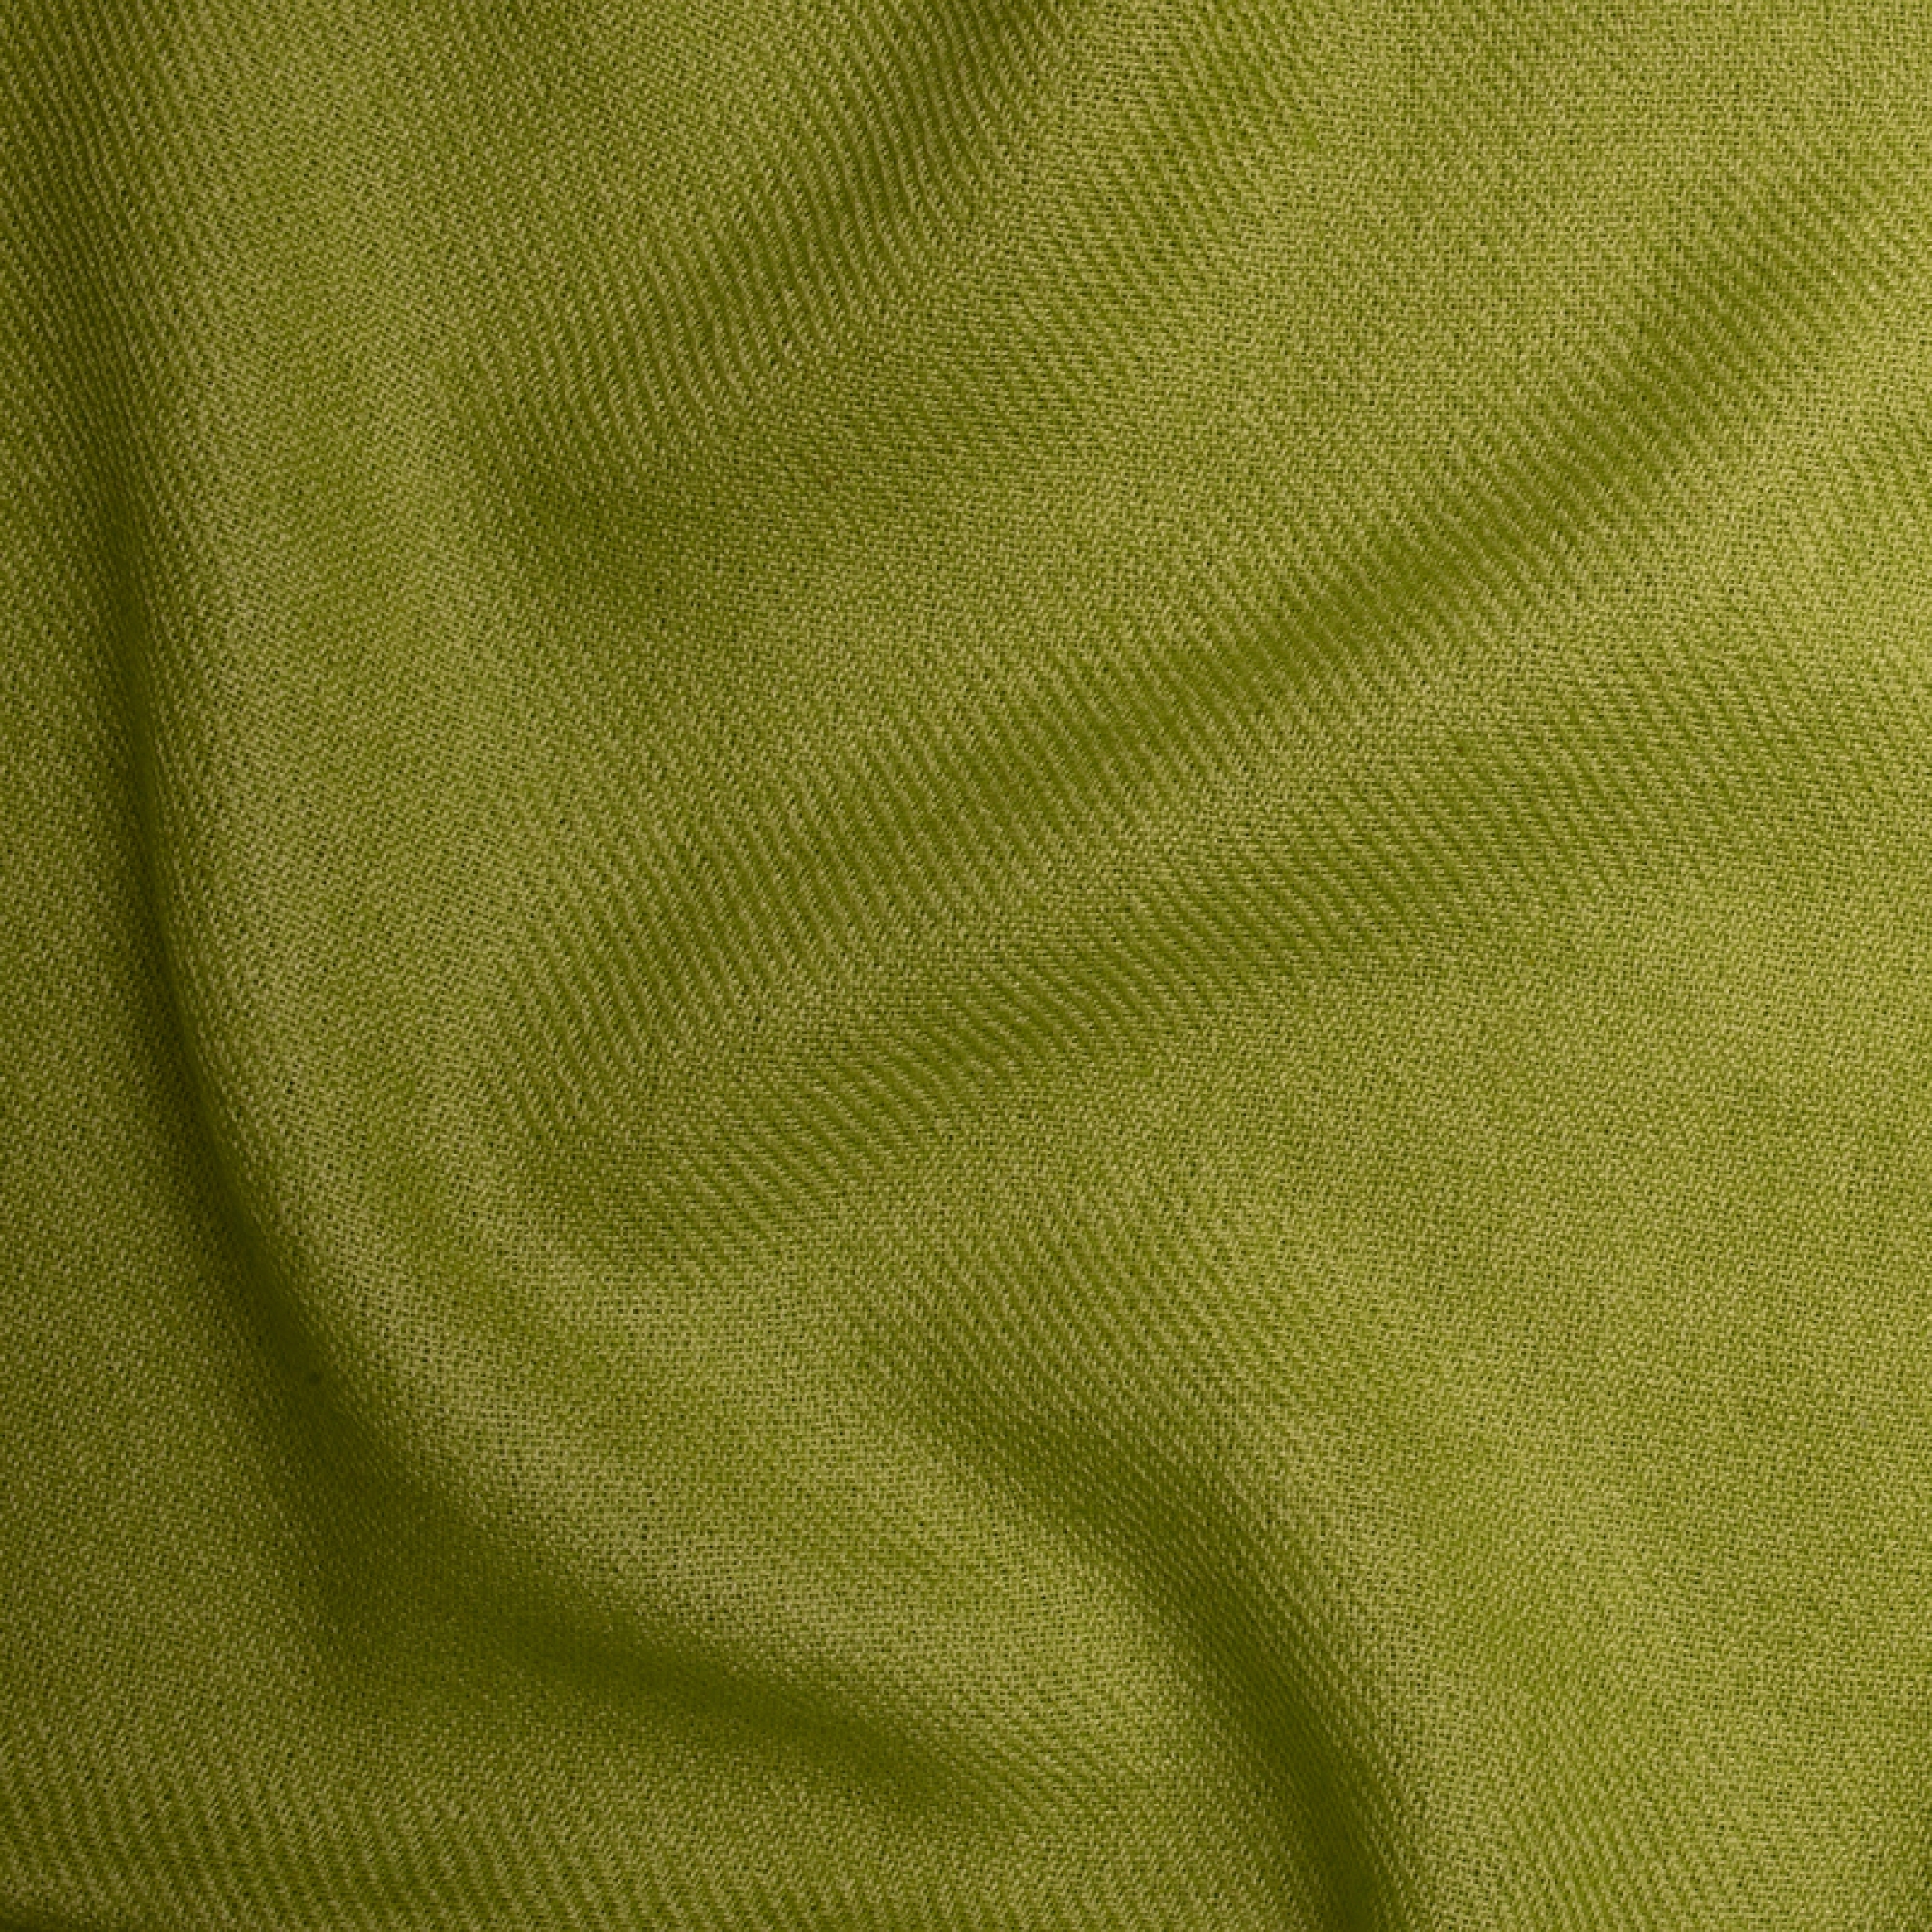 Cashmere accessories blanket toodoo plain l 220 x 220 macaw green 220x220cm